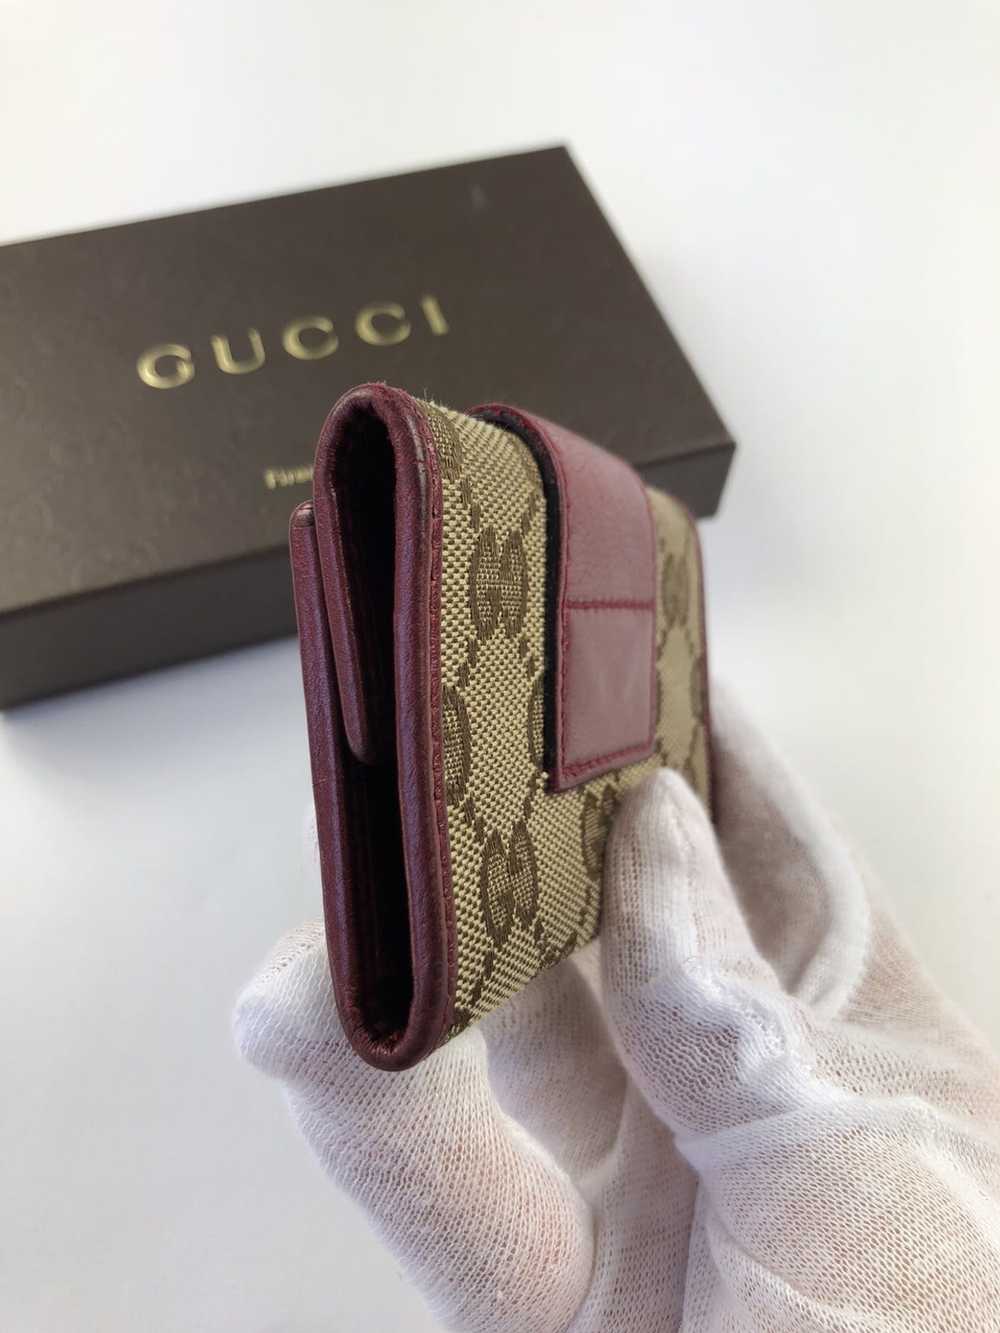 Gucci Gucci gg canvas monogram key holder - image 6